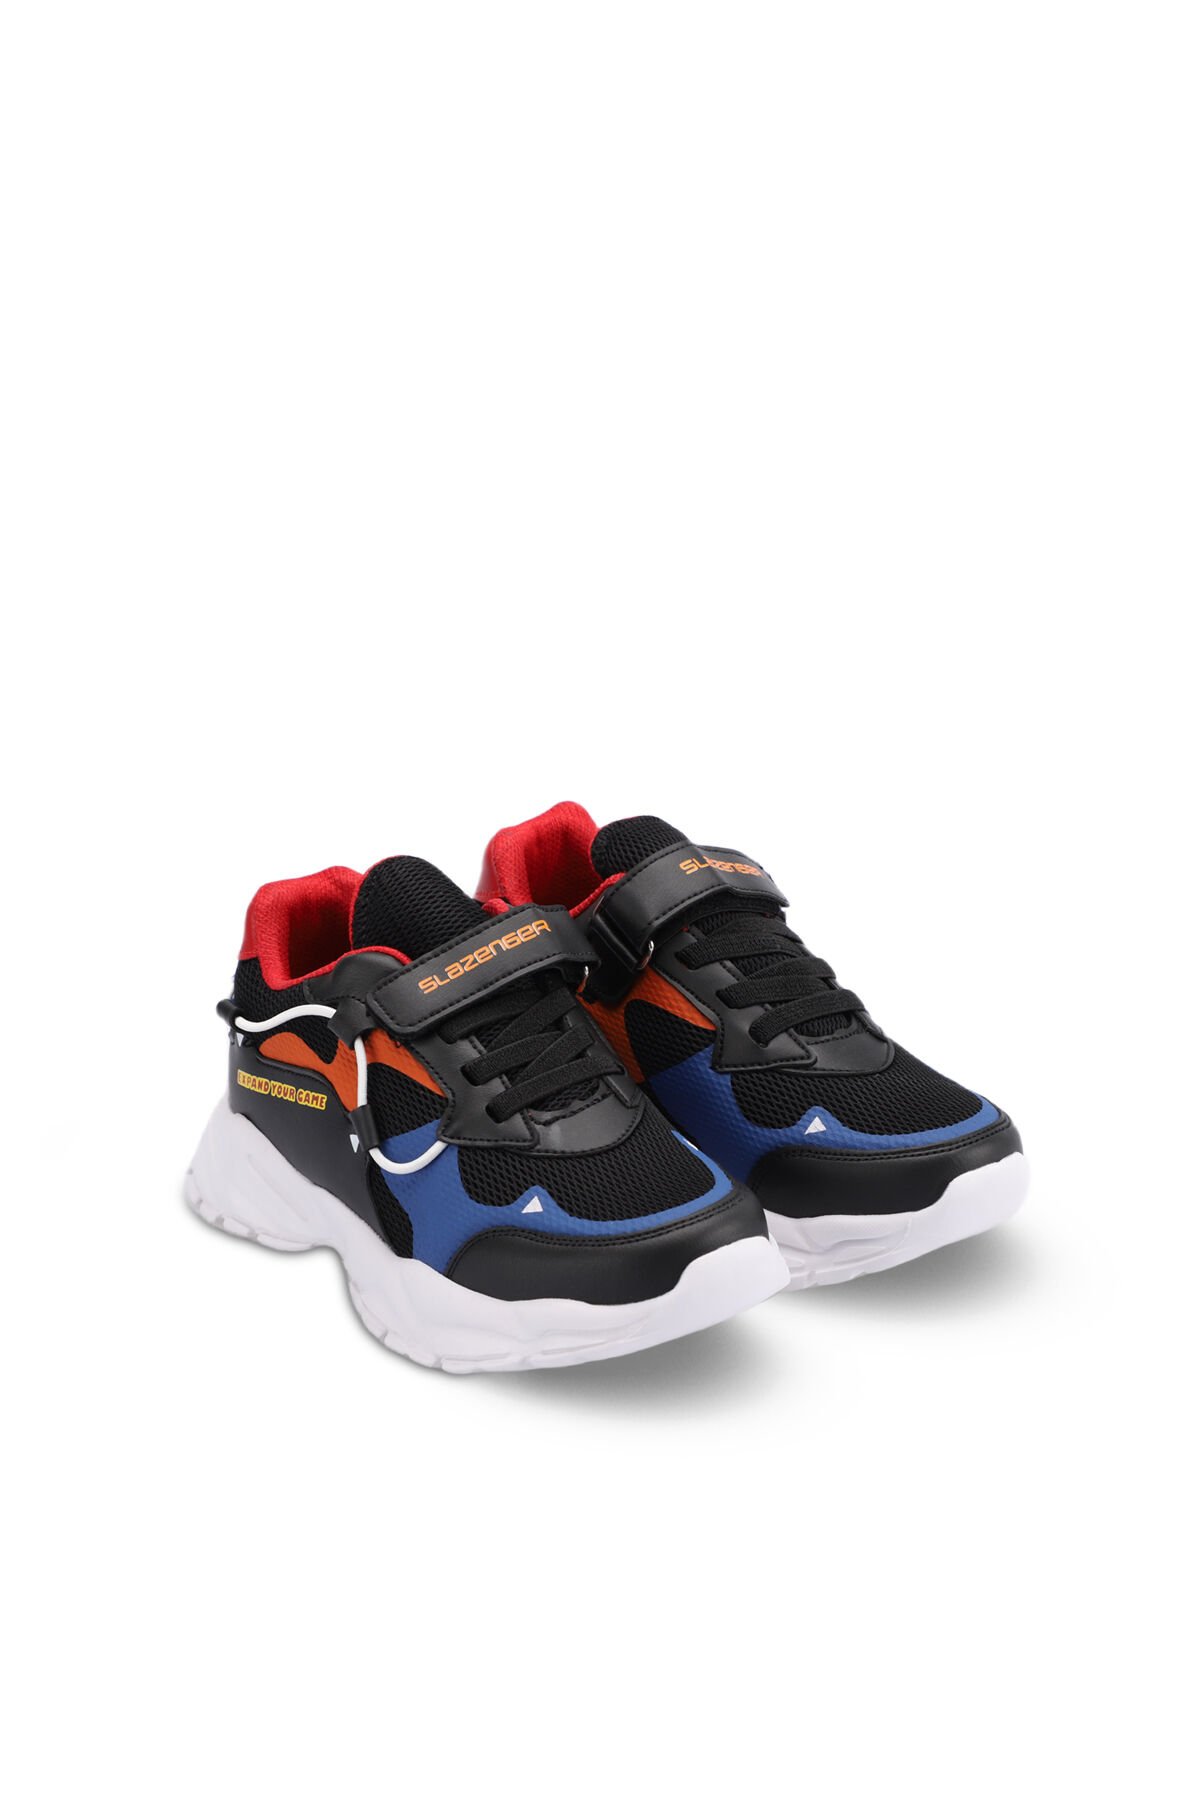 KEKOA Sneaker Erkek Çocuk Ayakkabı Siyah / Mavi - Thumbnail